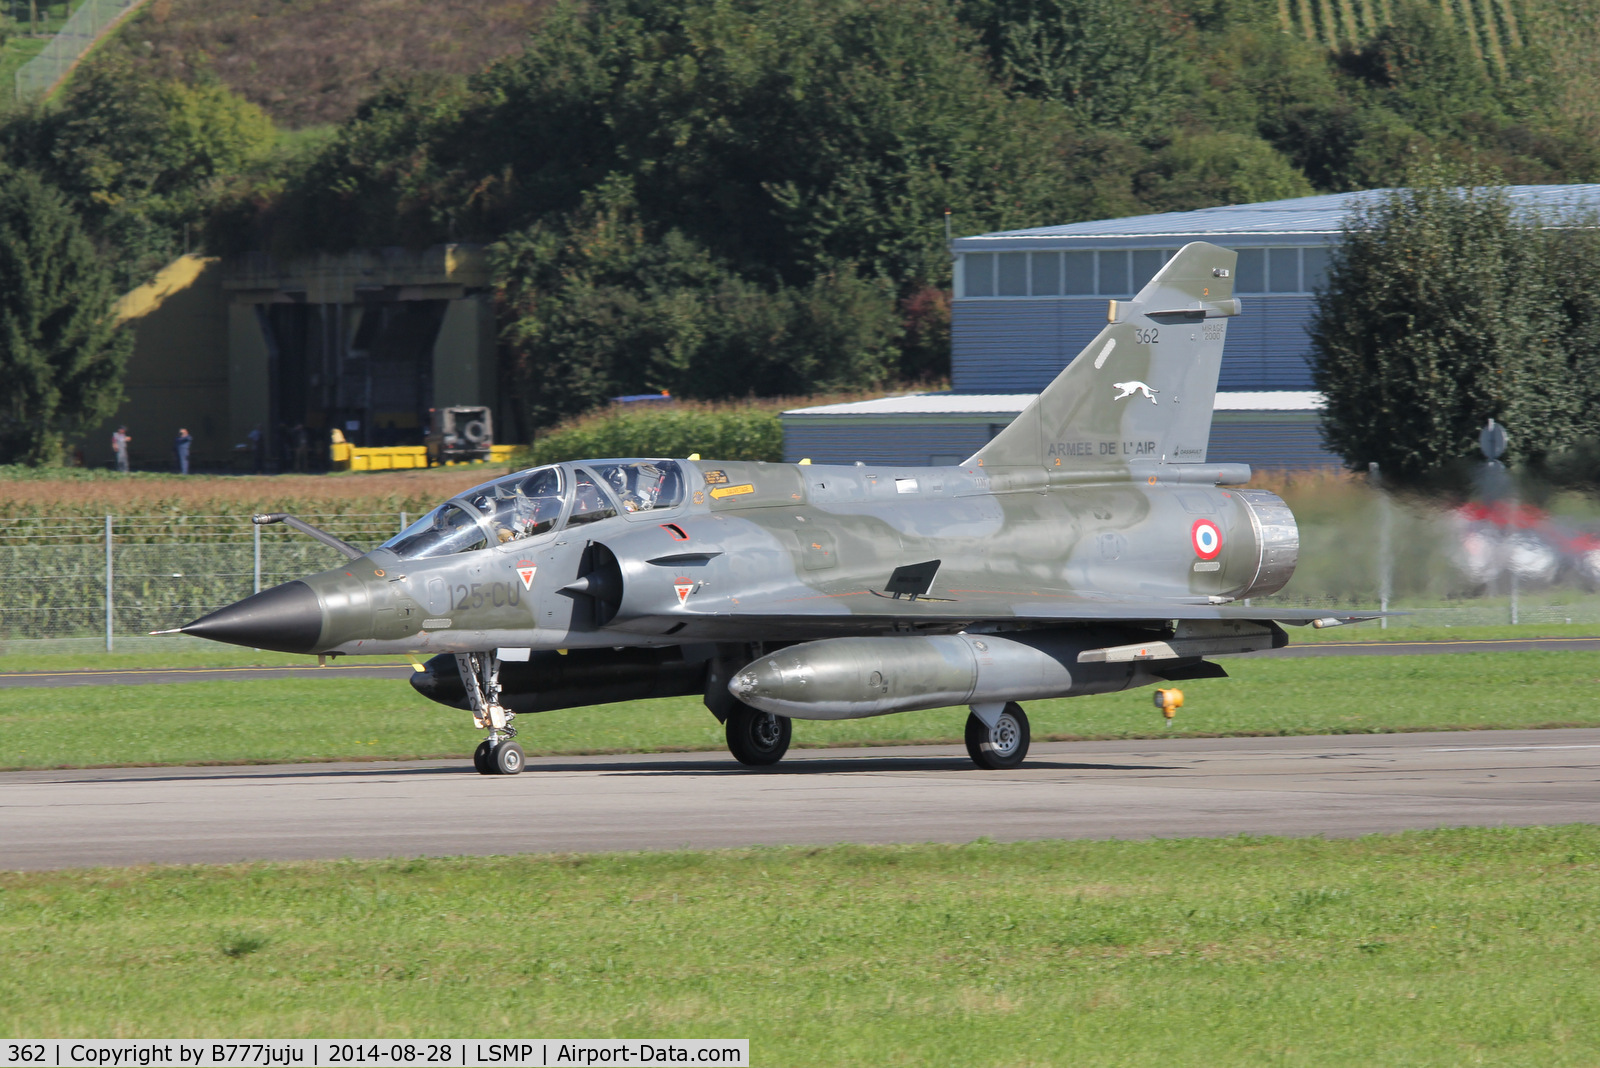 362, Dassault Mirage 2000N C/N 347, at AIR14